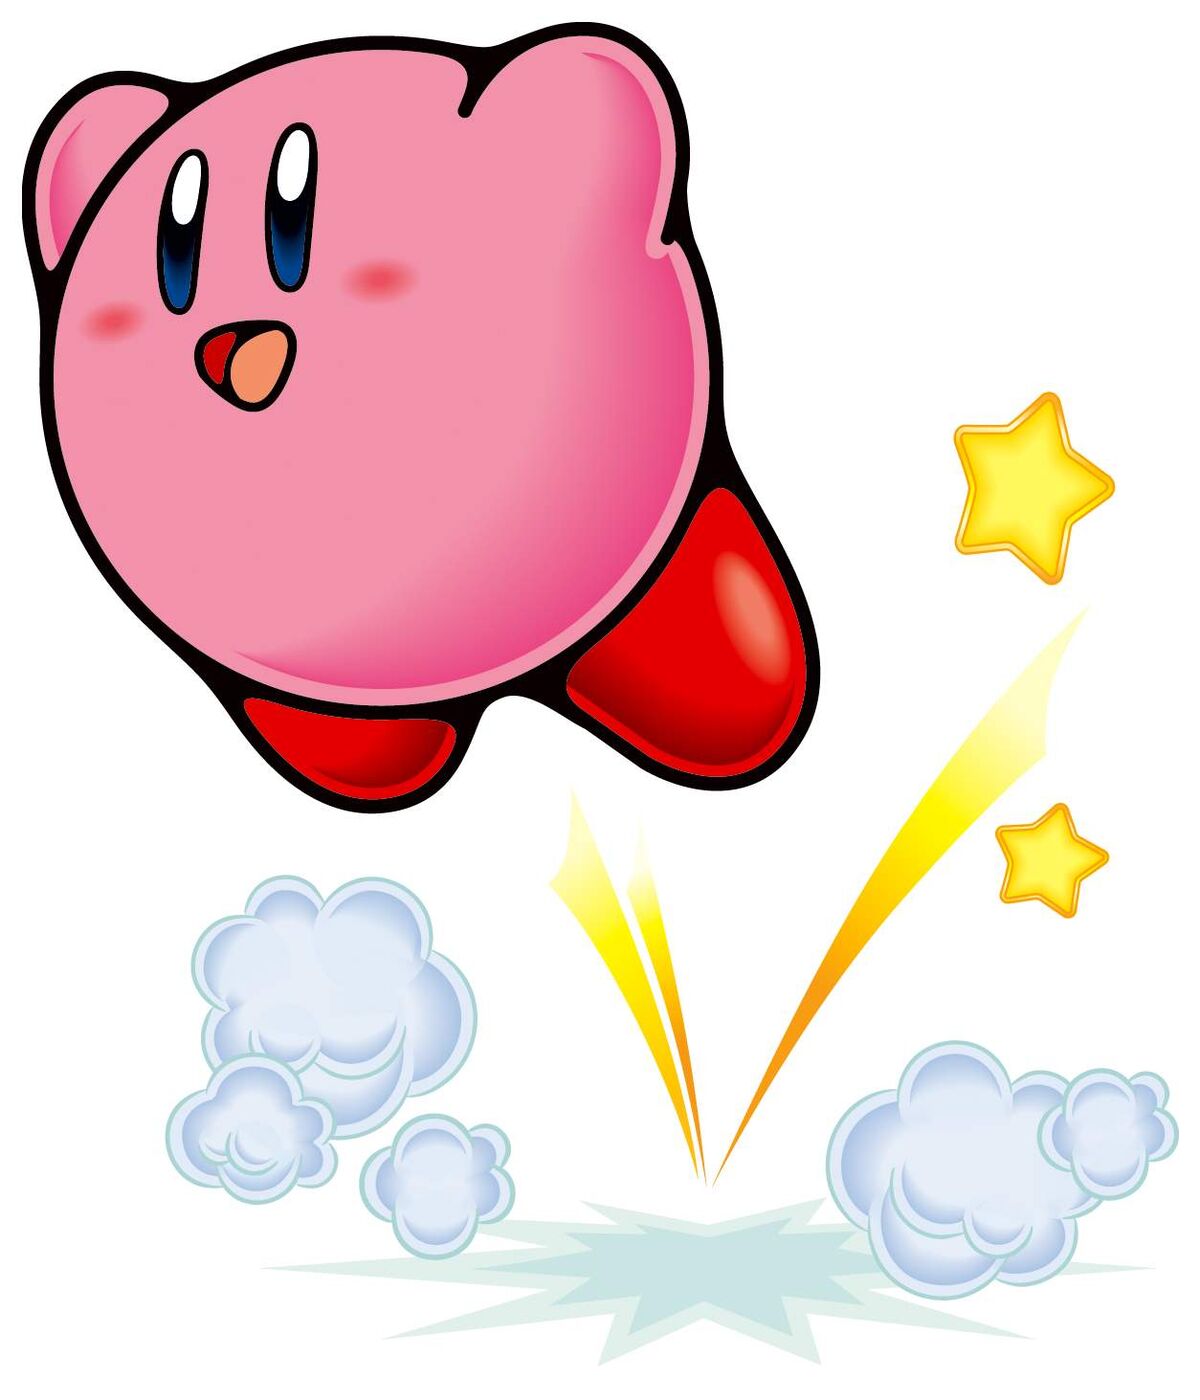 Jump - WiKirby: it's a wiki, about Kirby!